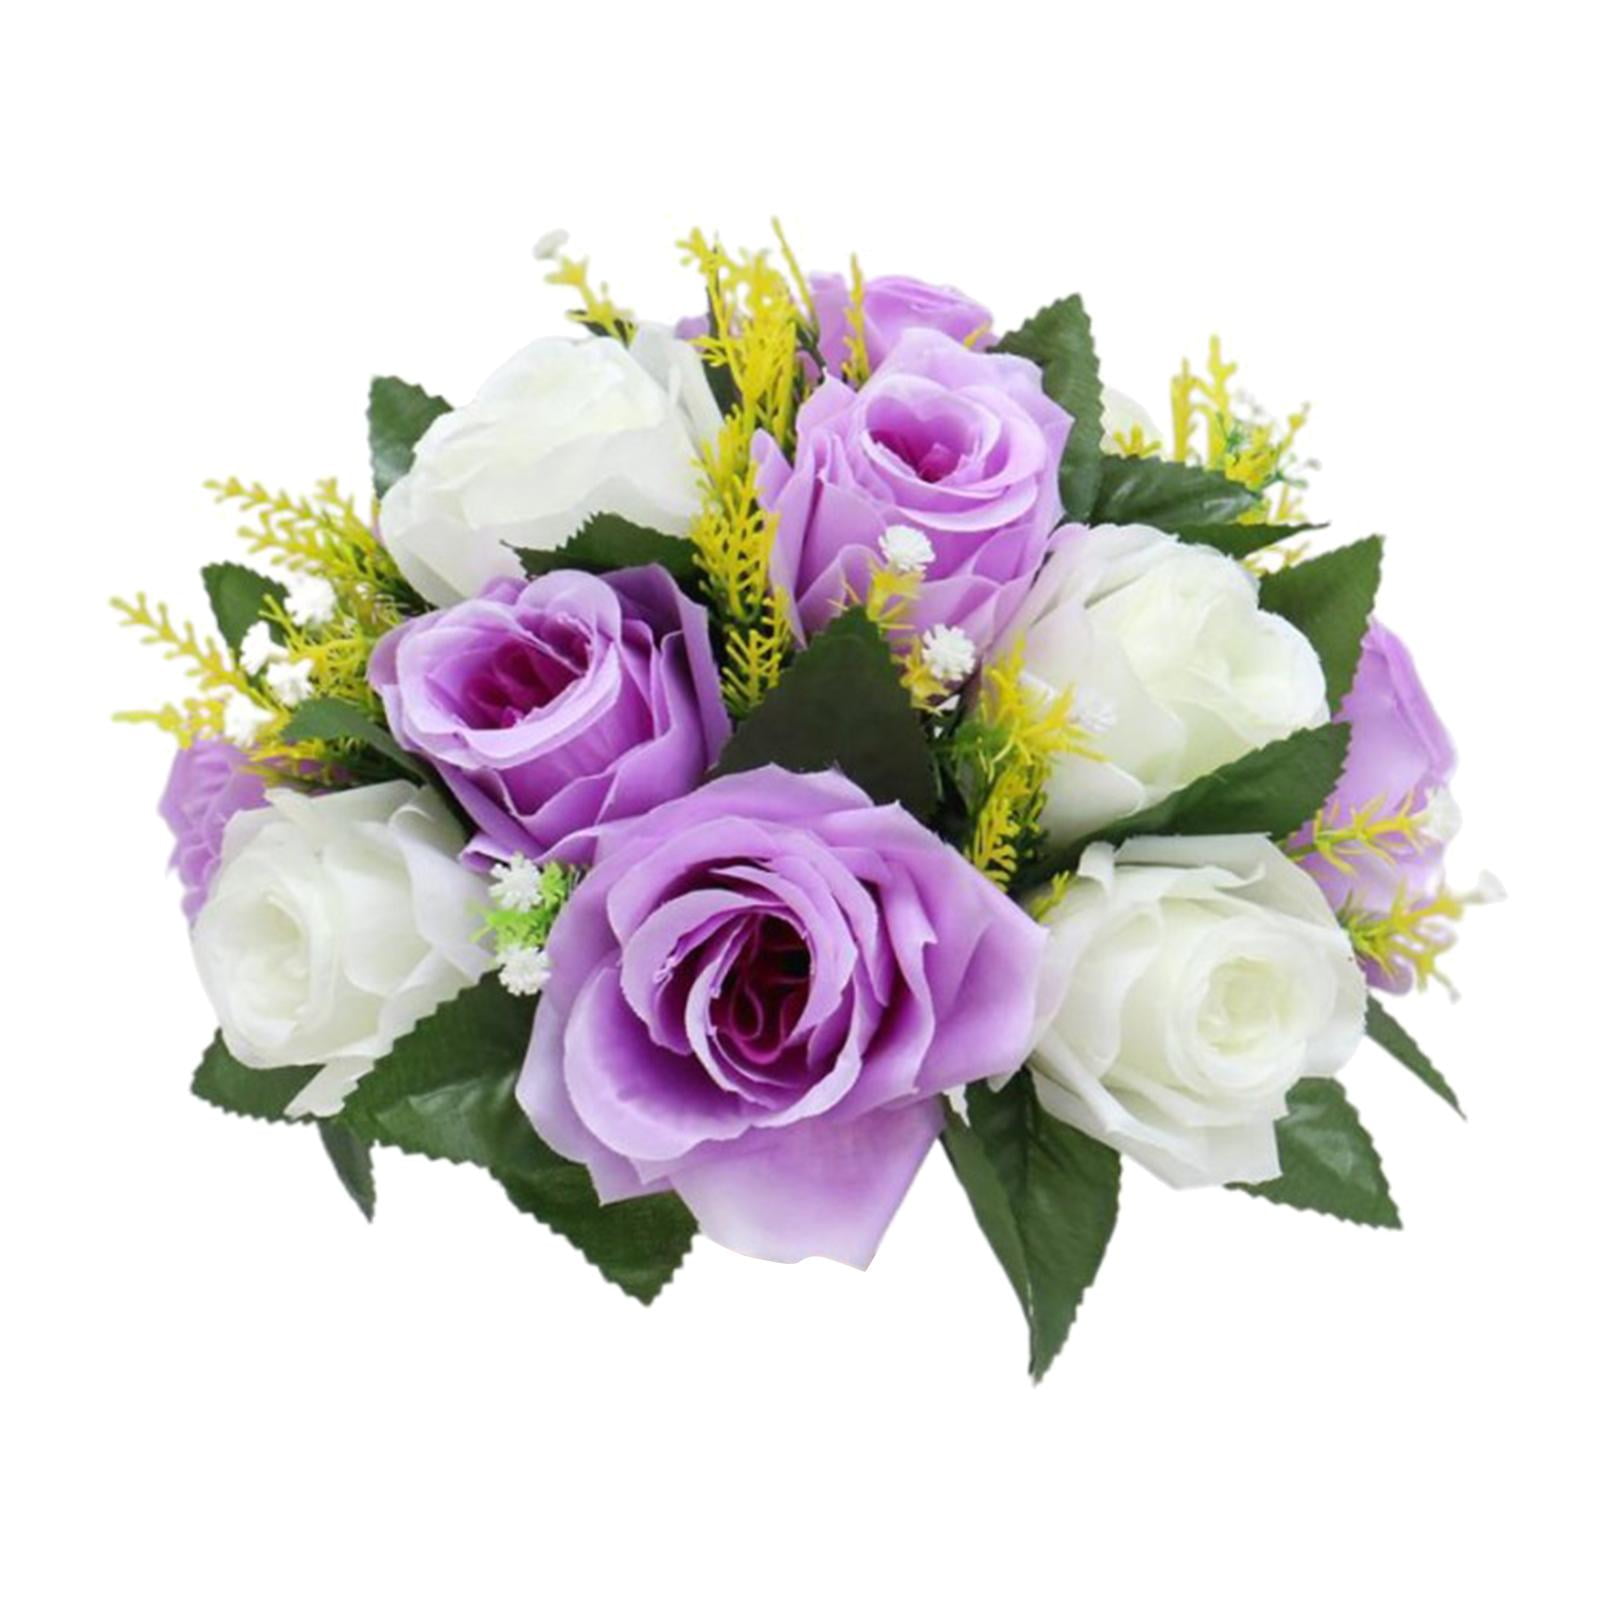 Realistic Artificial Rose Flowers 15 Heads Wedding Arrangement Bouquets Party 